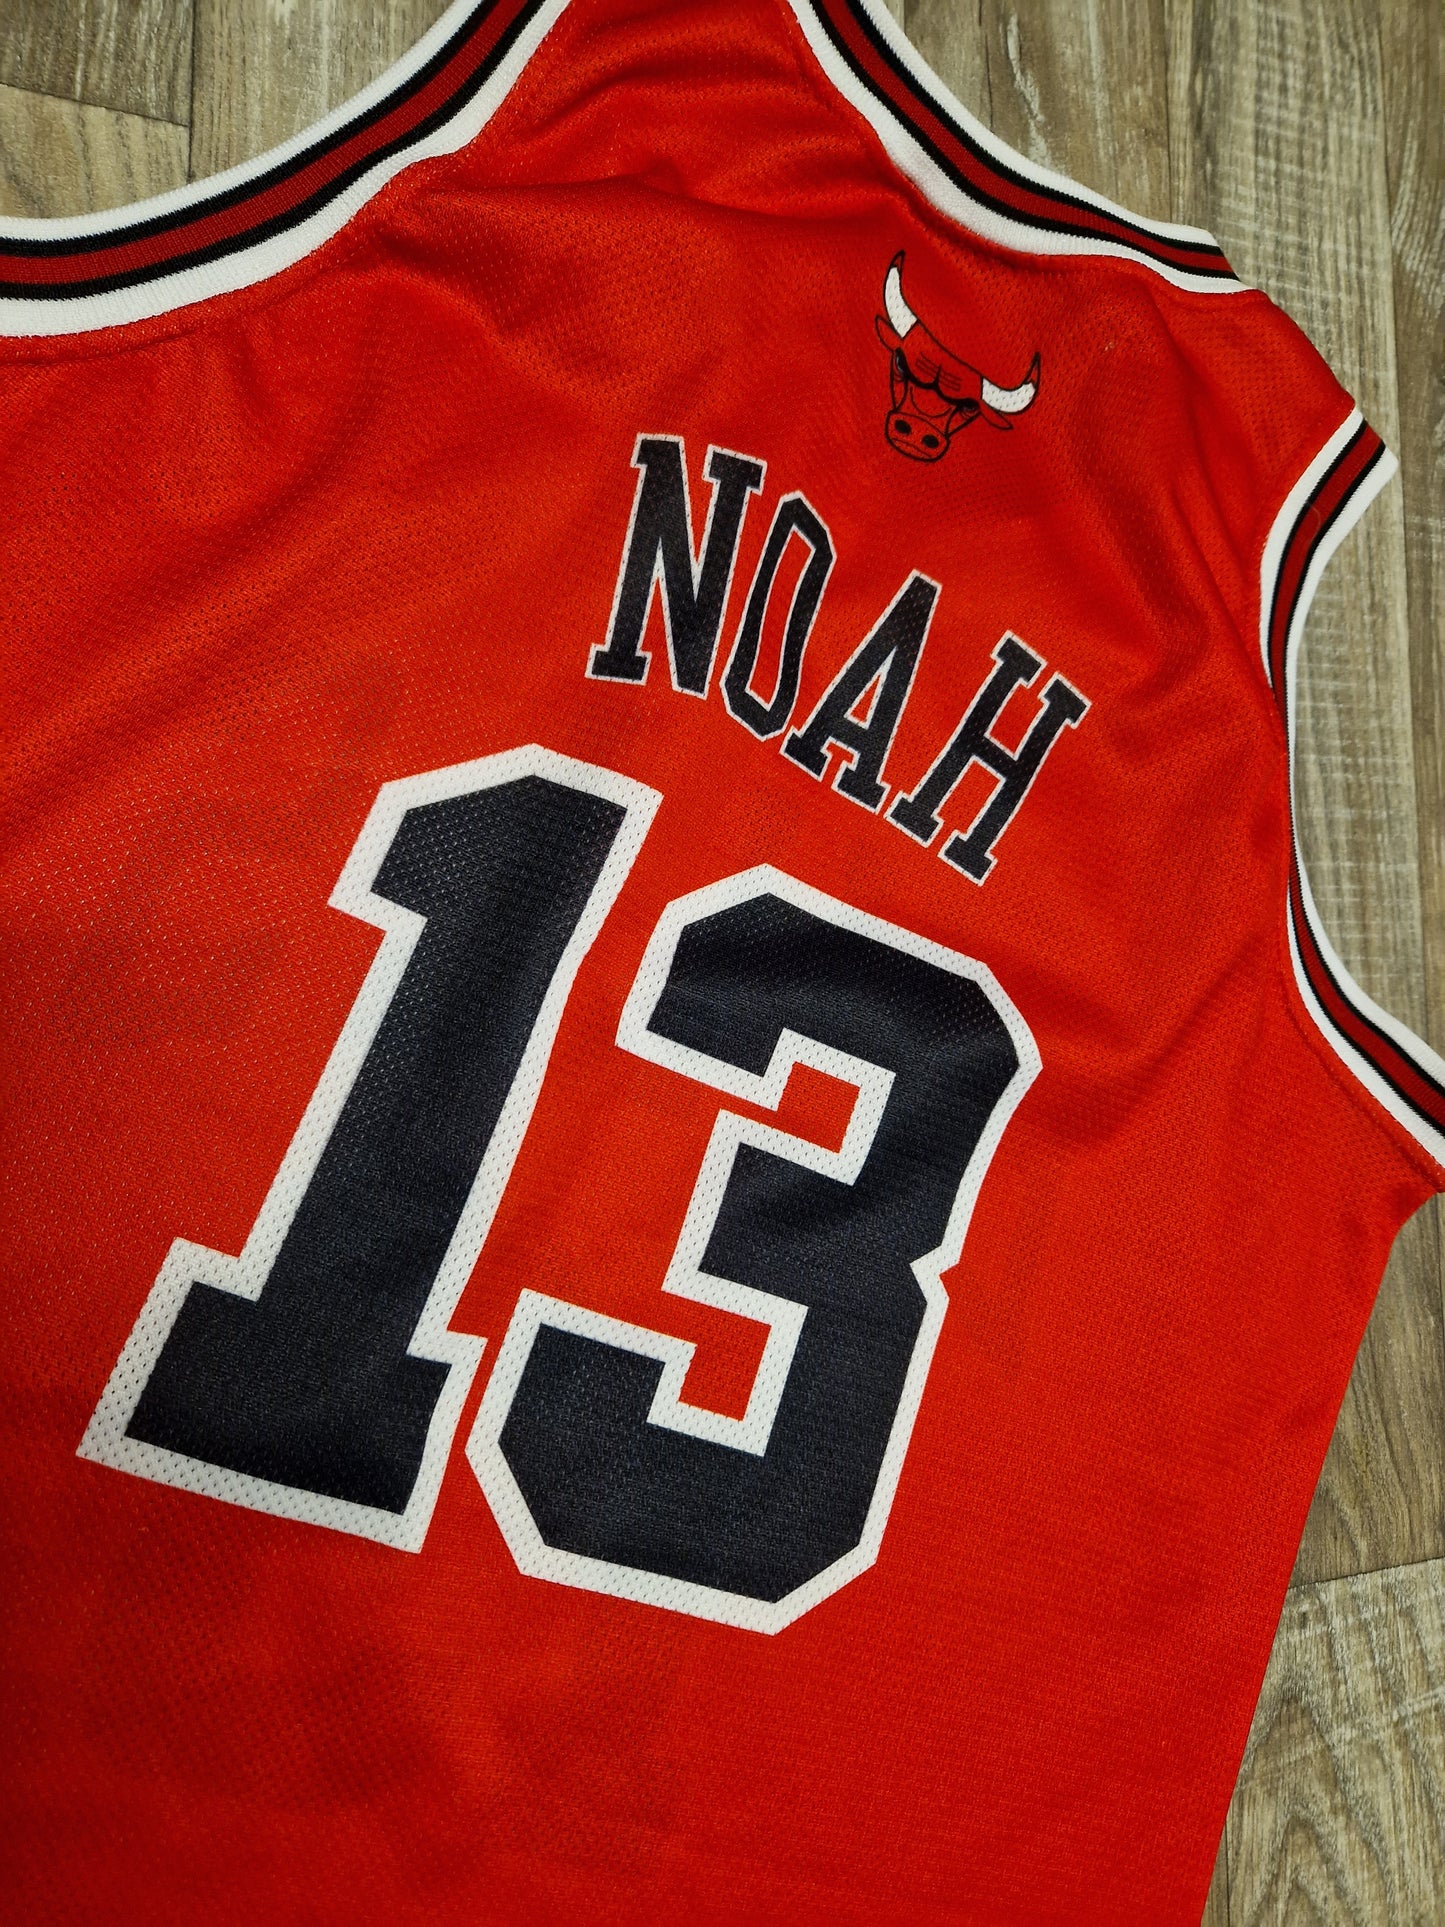 Joakim Noah Chicago Bulls Jersey Size Small